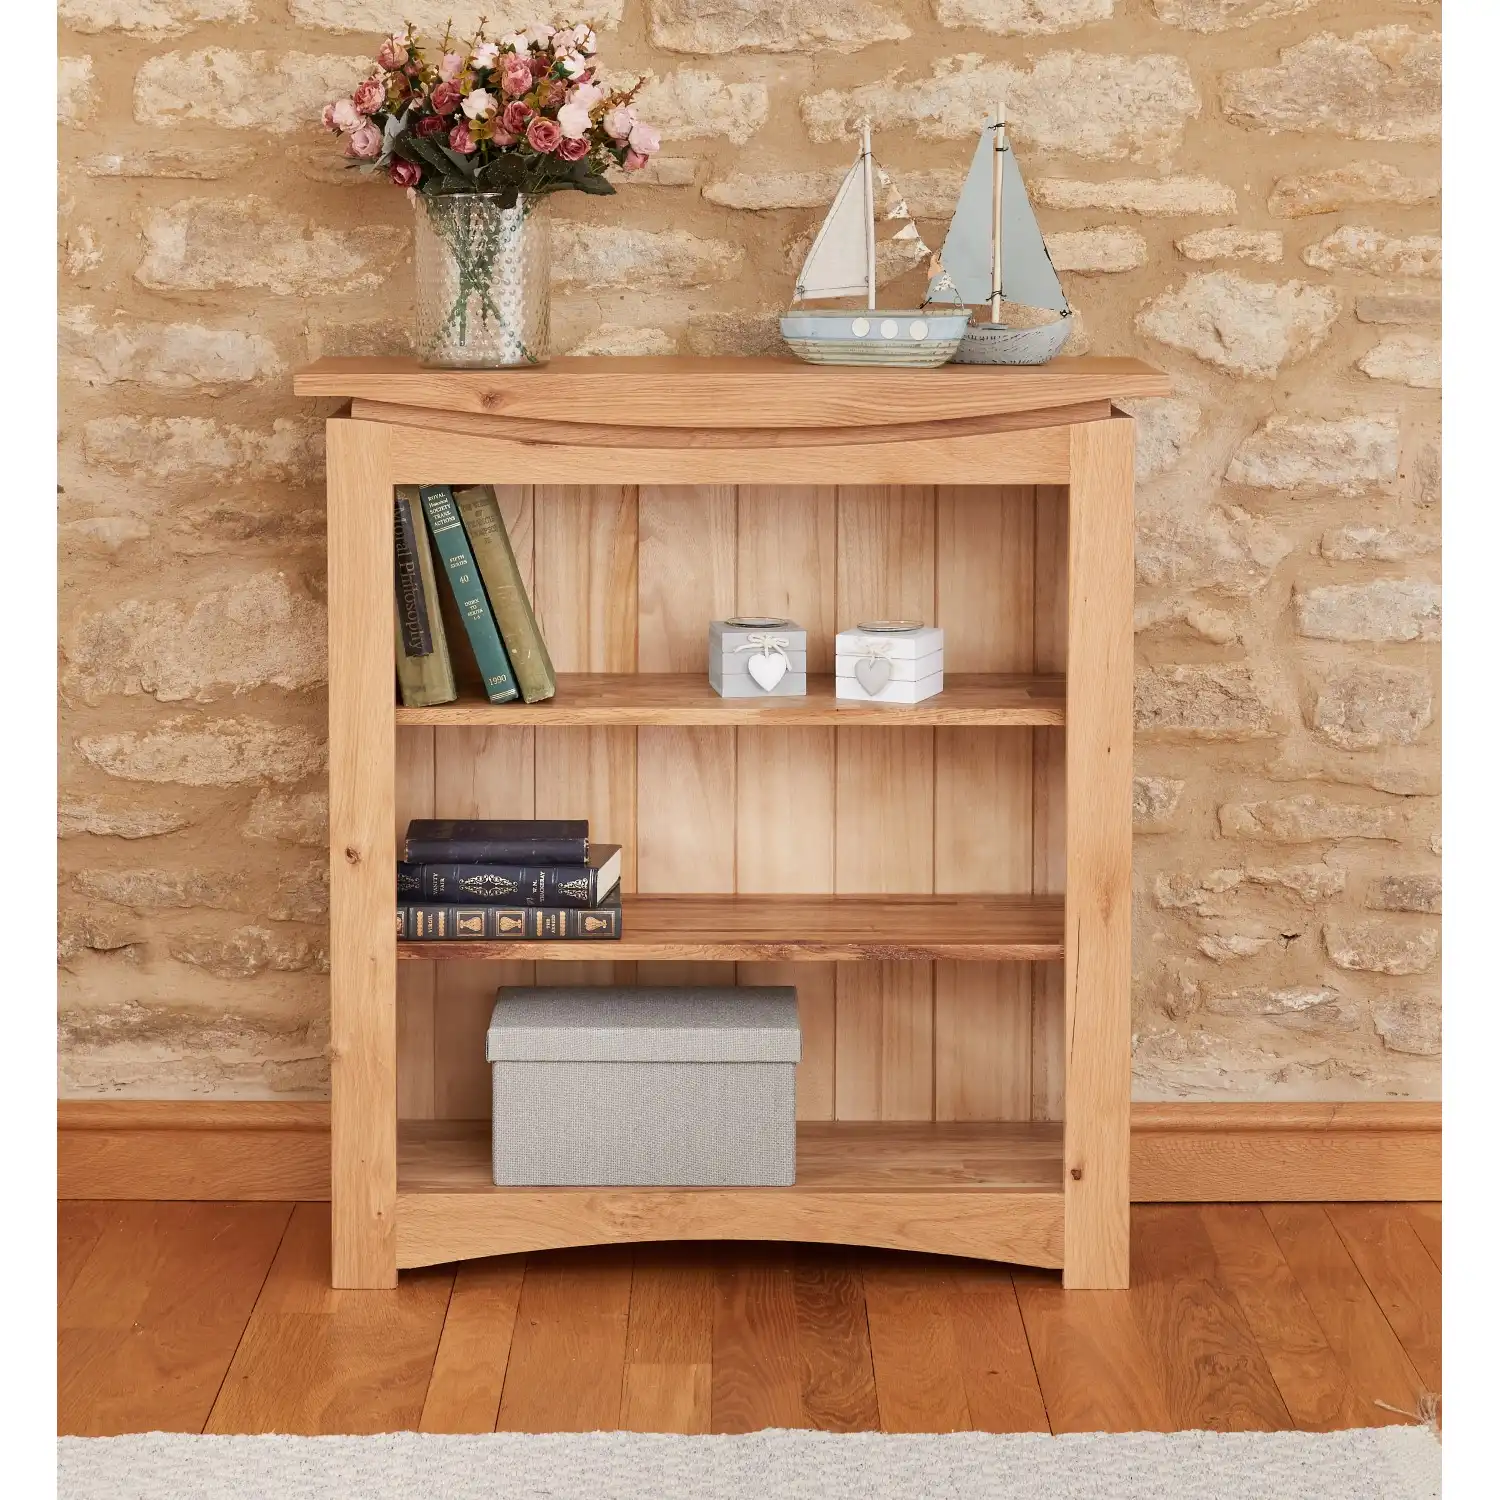 Light Solid Oak Small Low Bookcase Shelf Display Shelf Unit